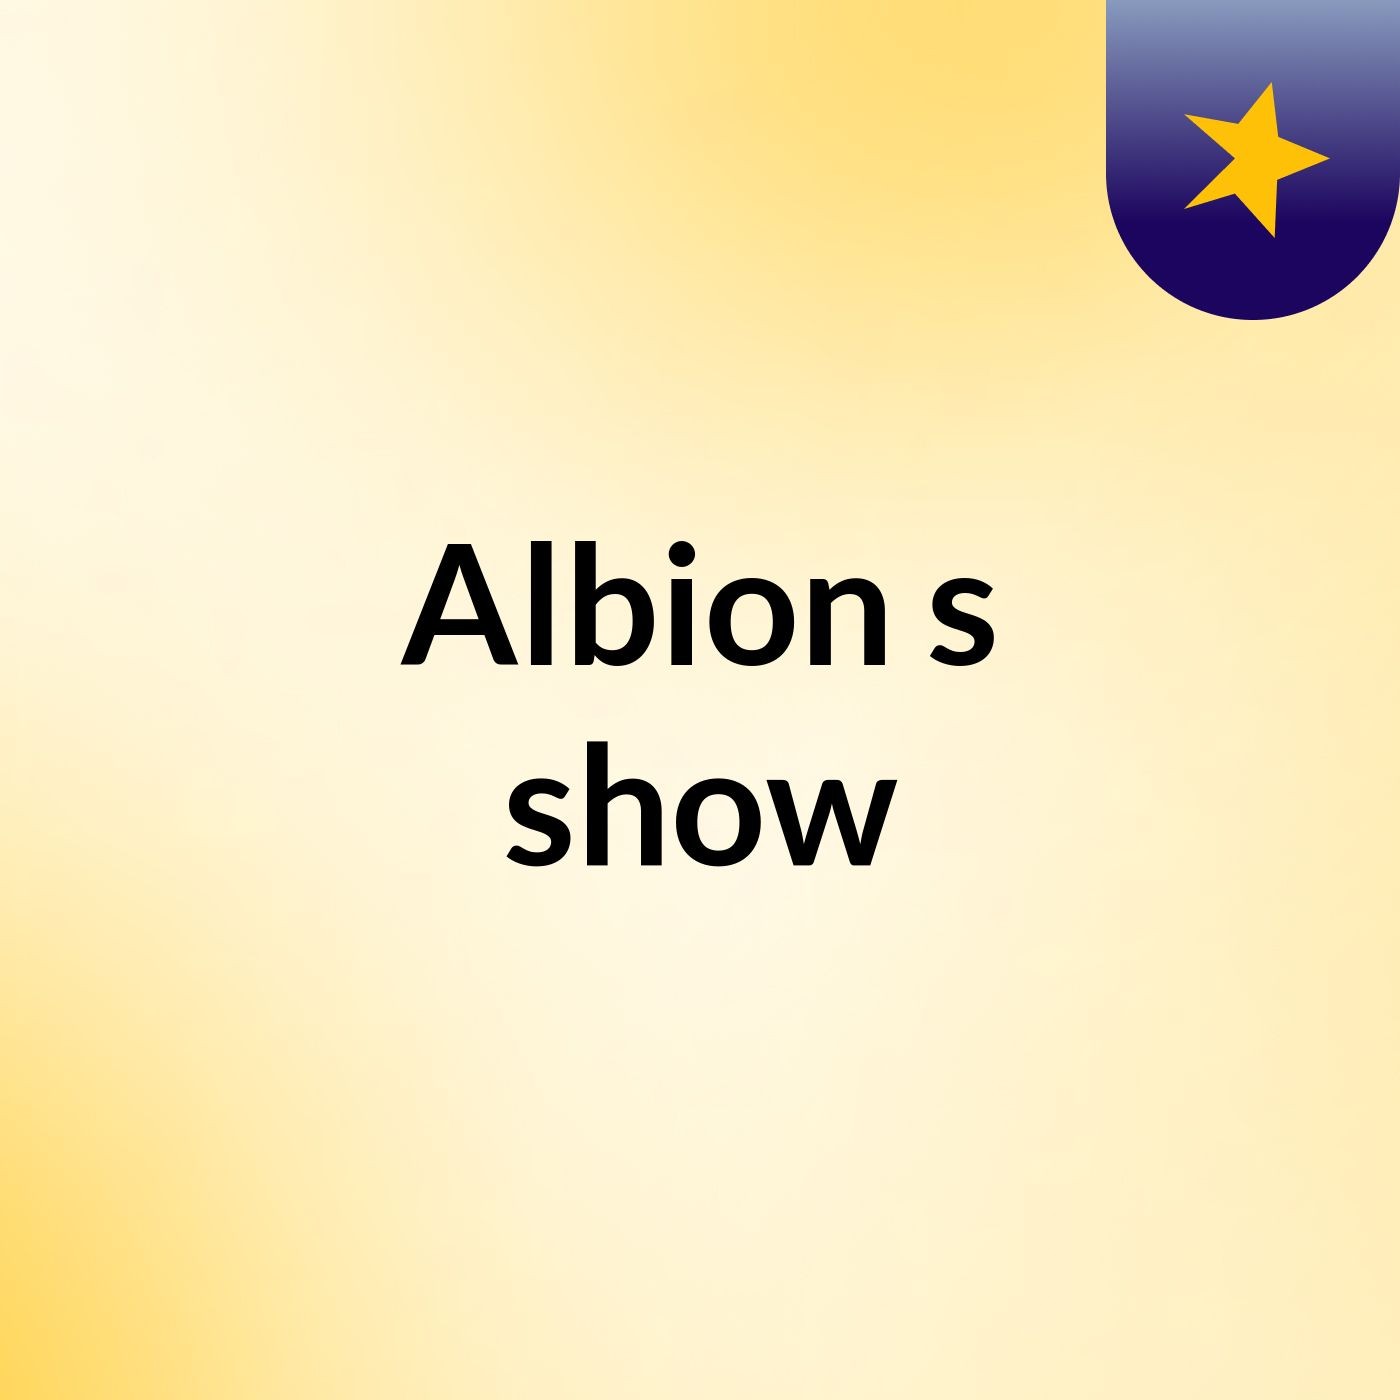 Albion's show